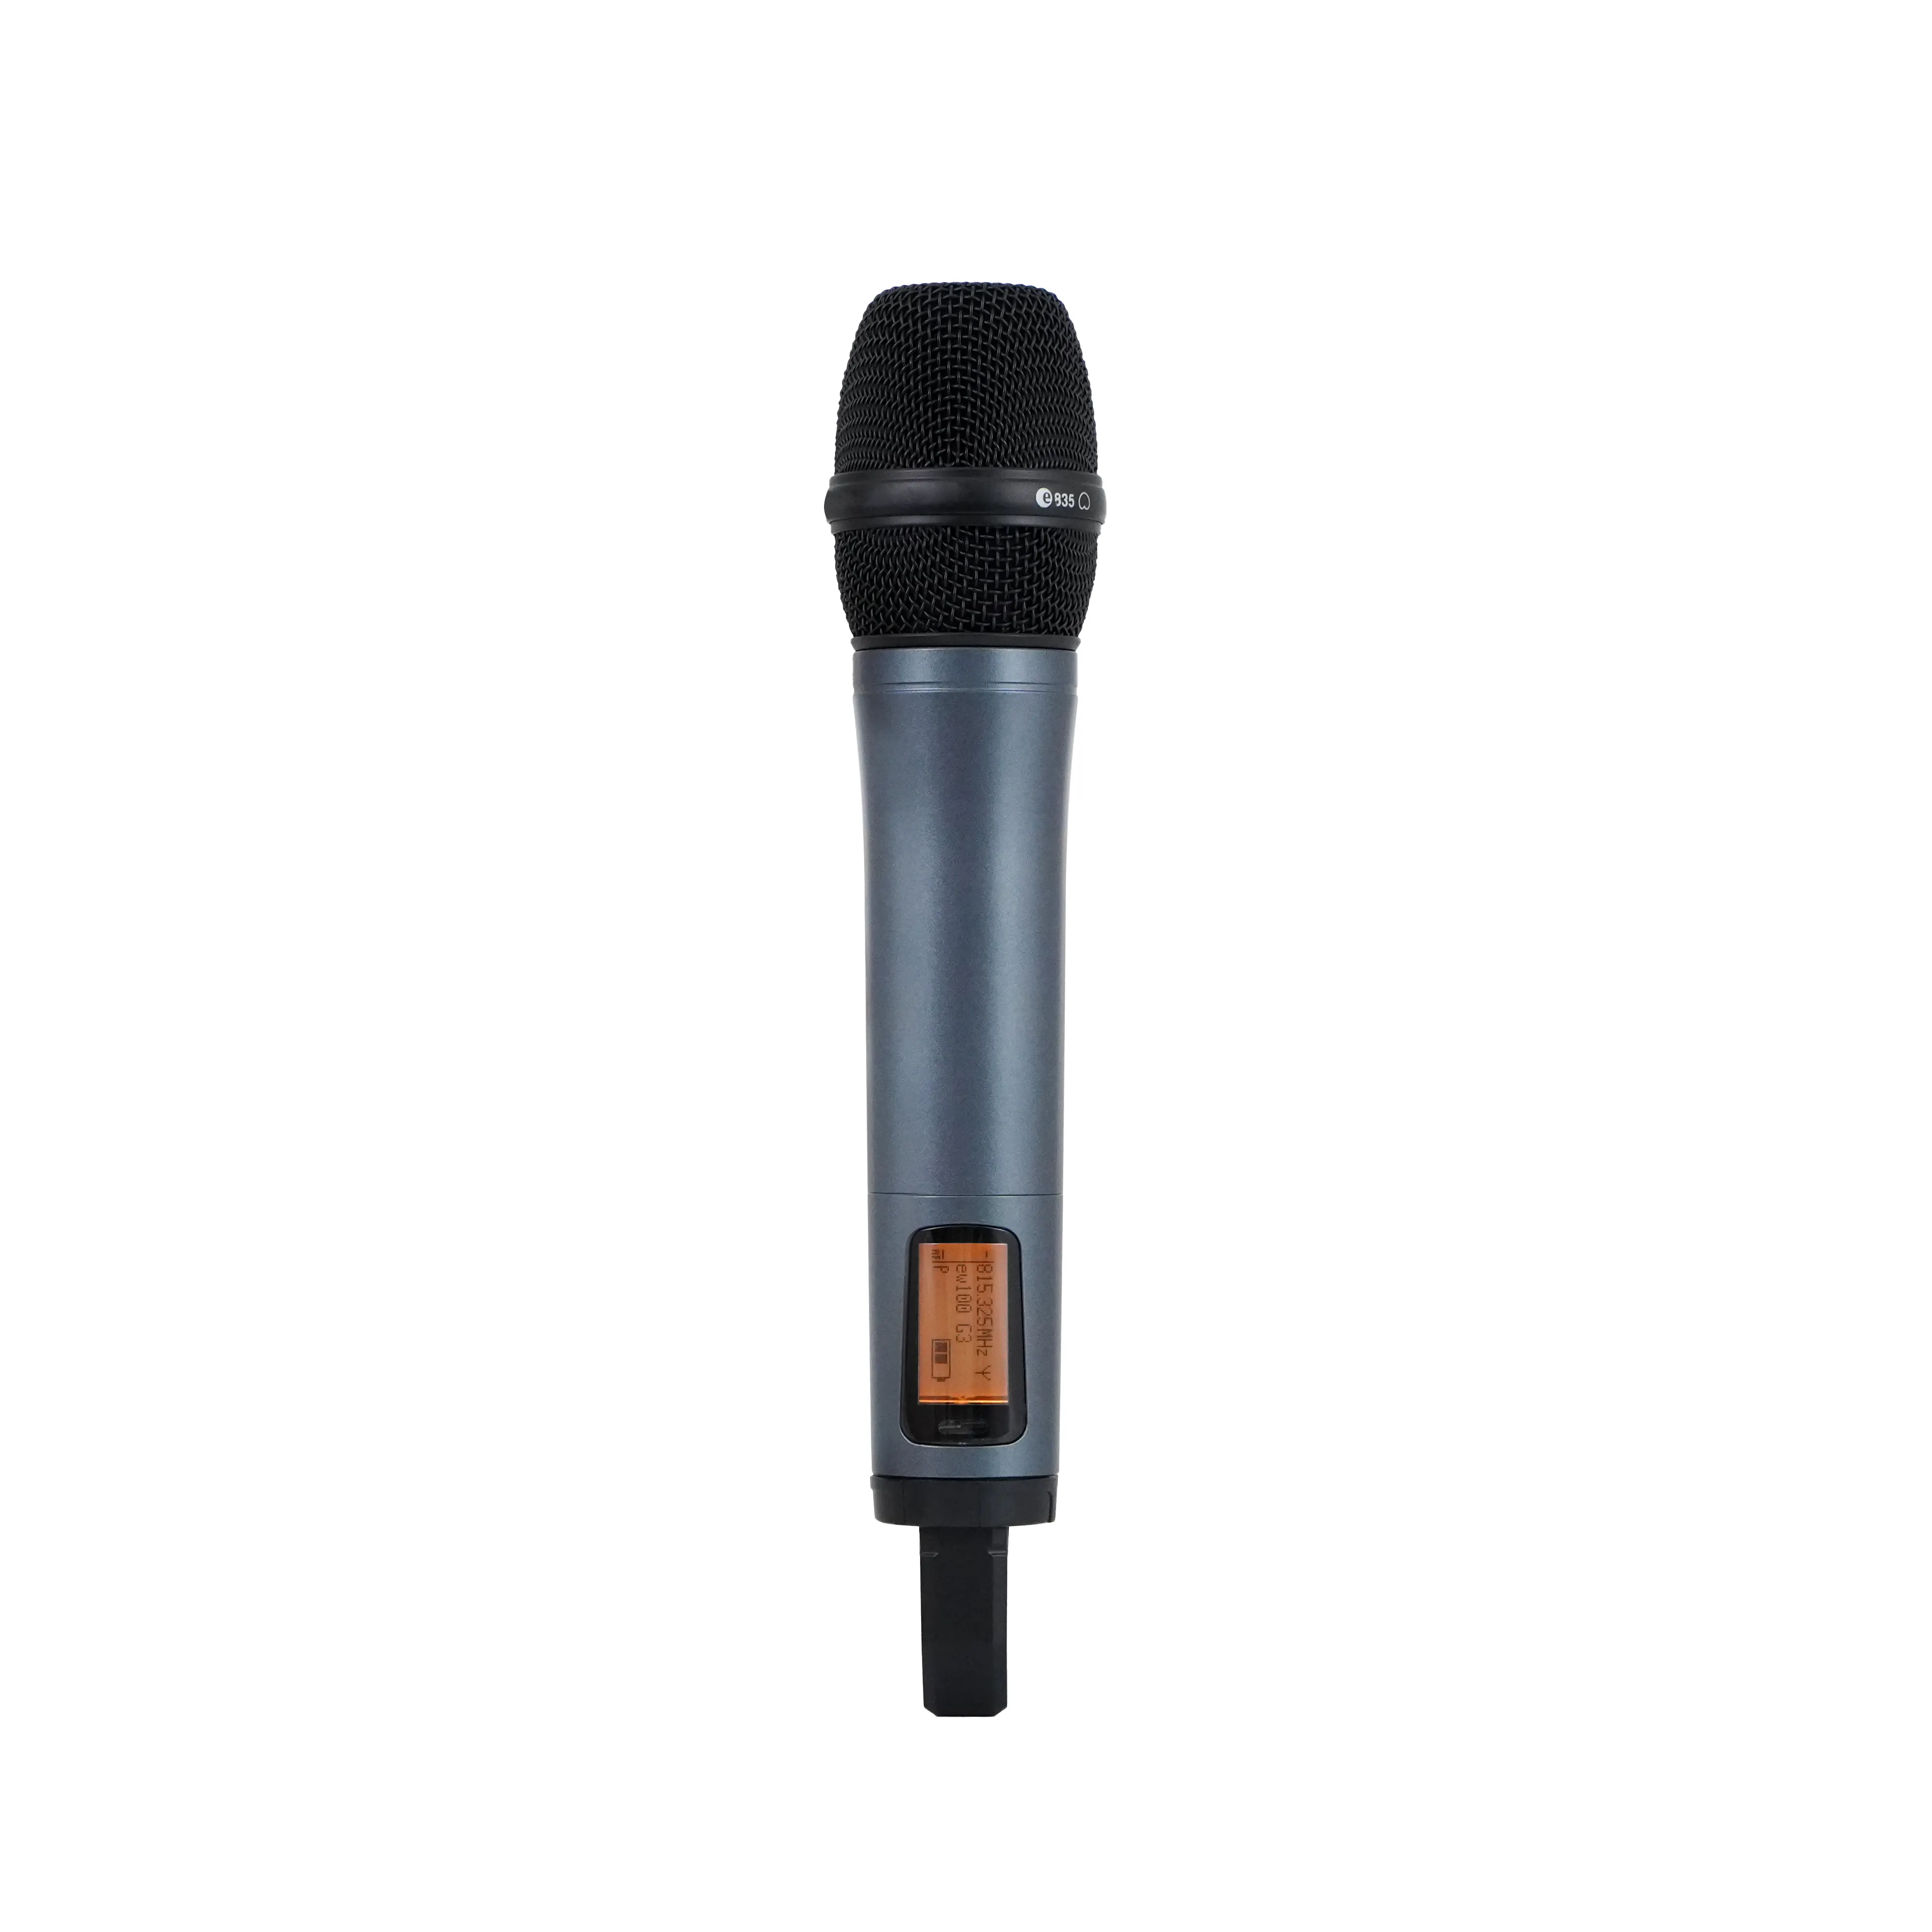 EW135G3 senza fili voce dal vivo microfono senza fili sistema professionale UHF Mic sistema Karaoke palco